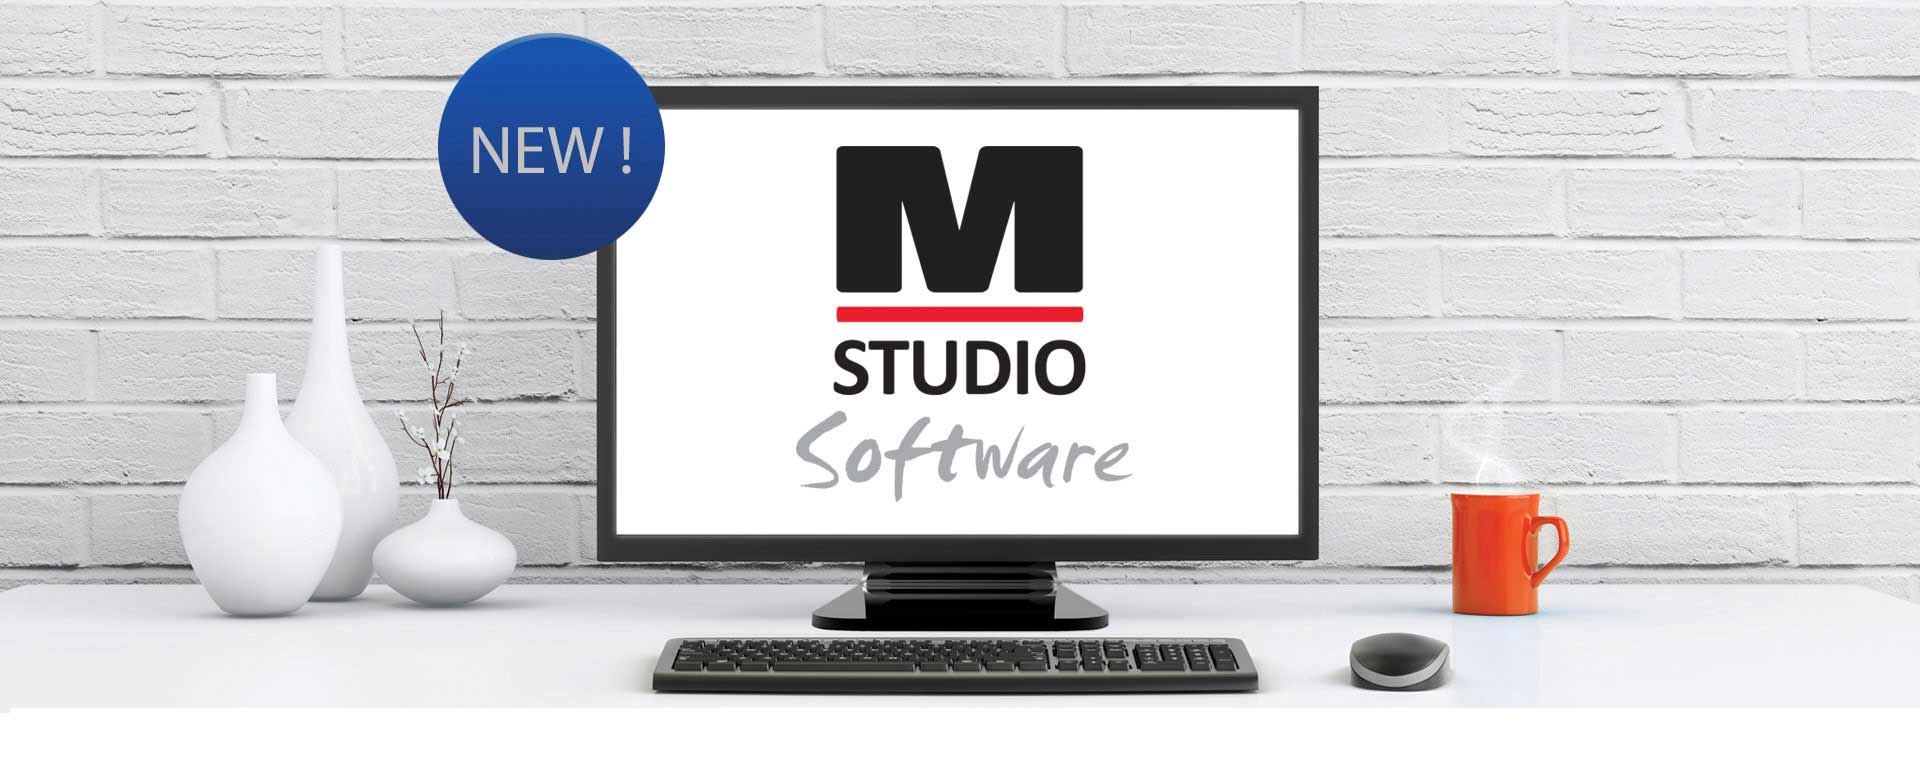 Studio software logo on computer screen